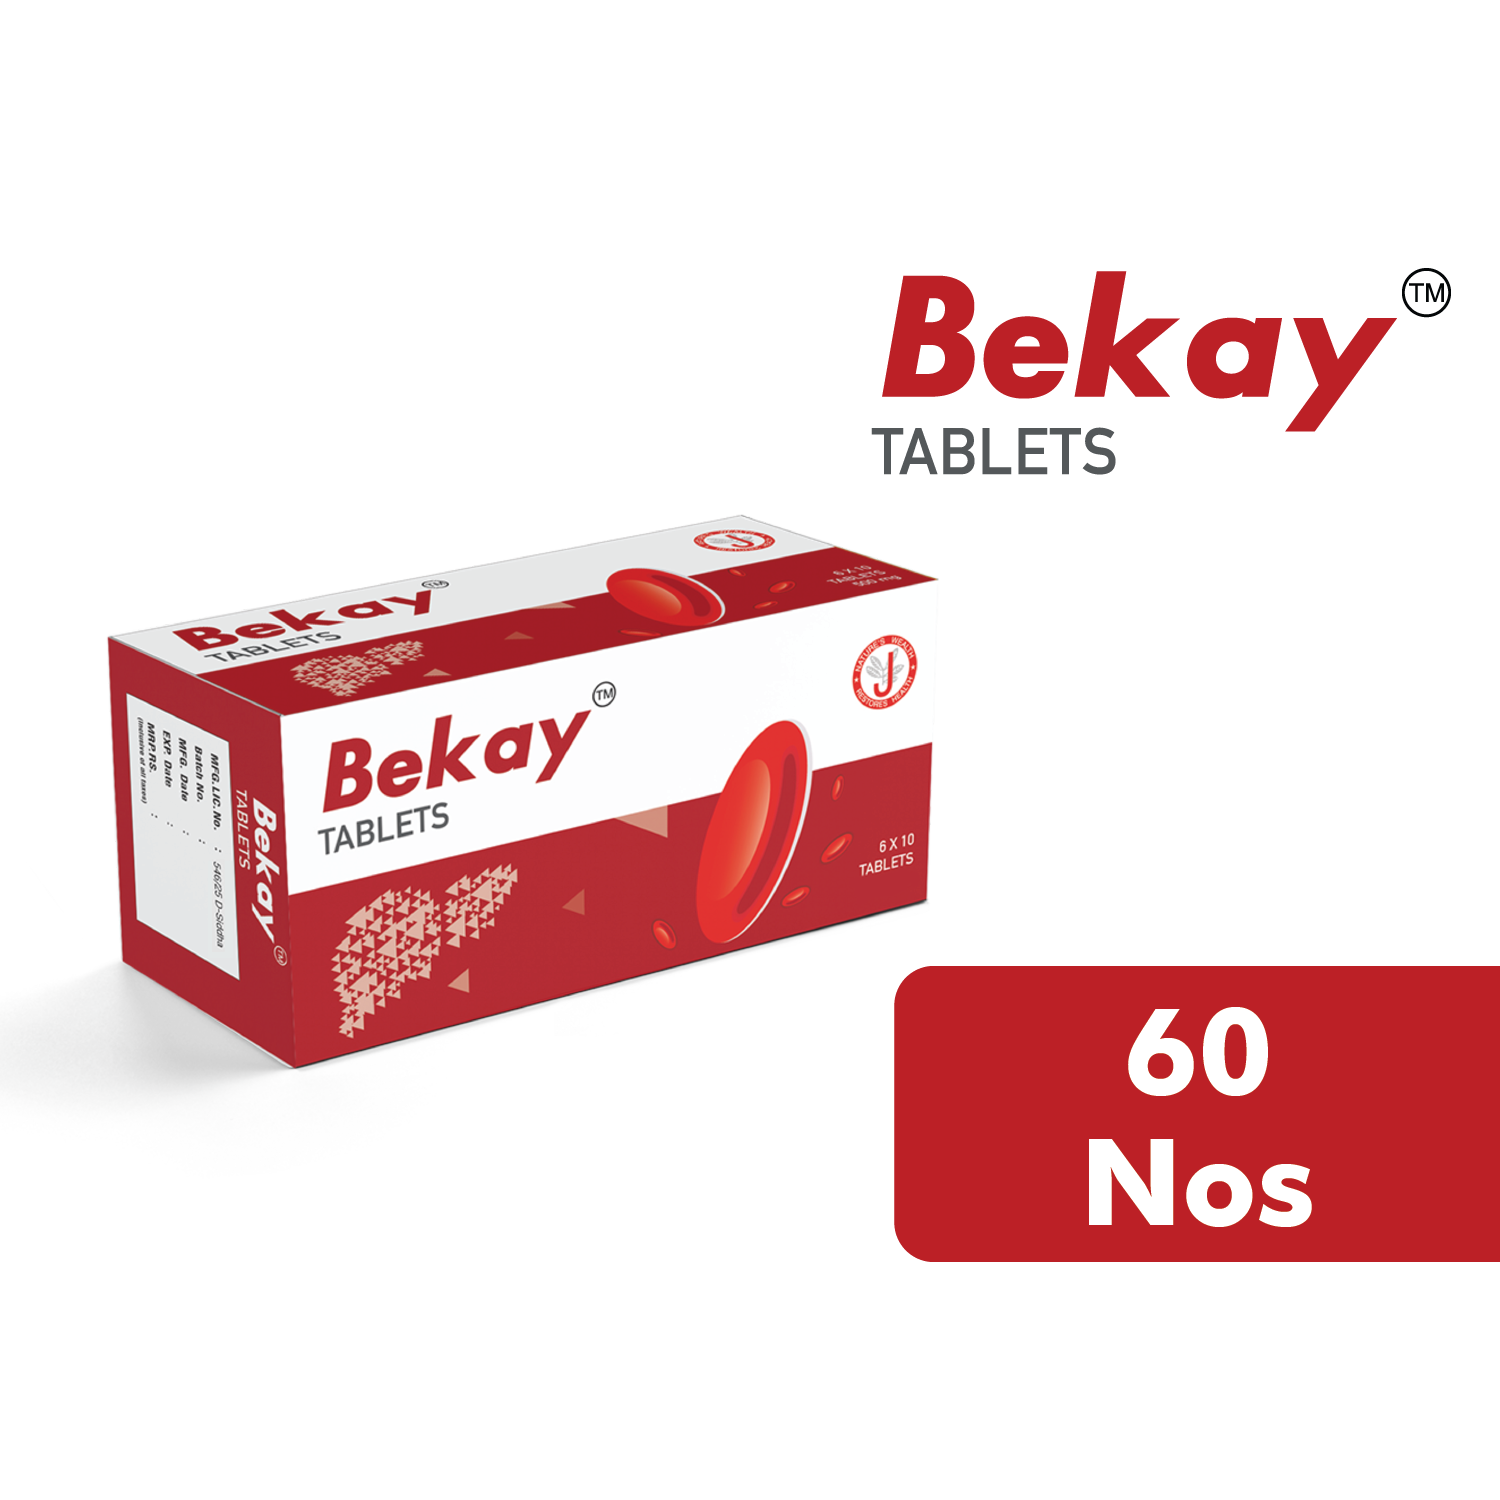 Bekay tablet 60 nos Hepatoprotection